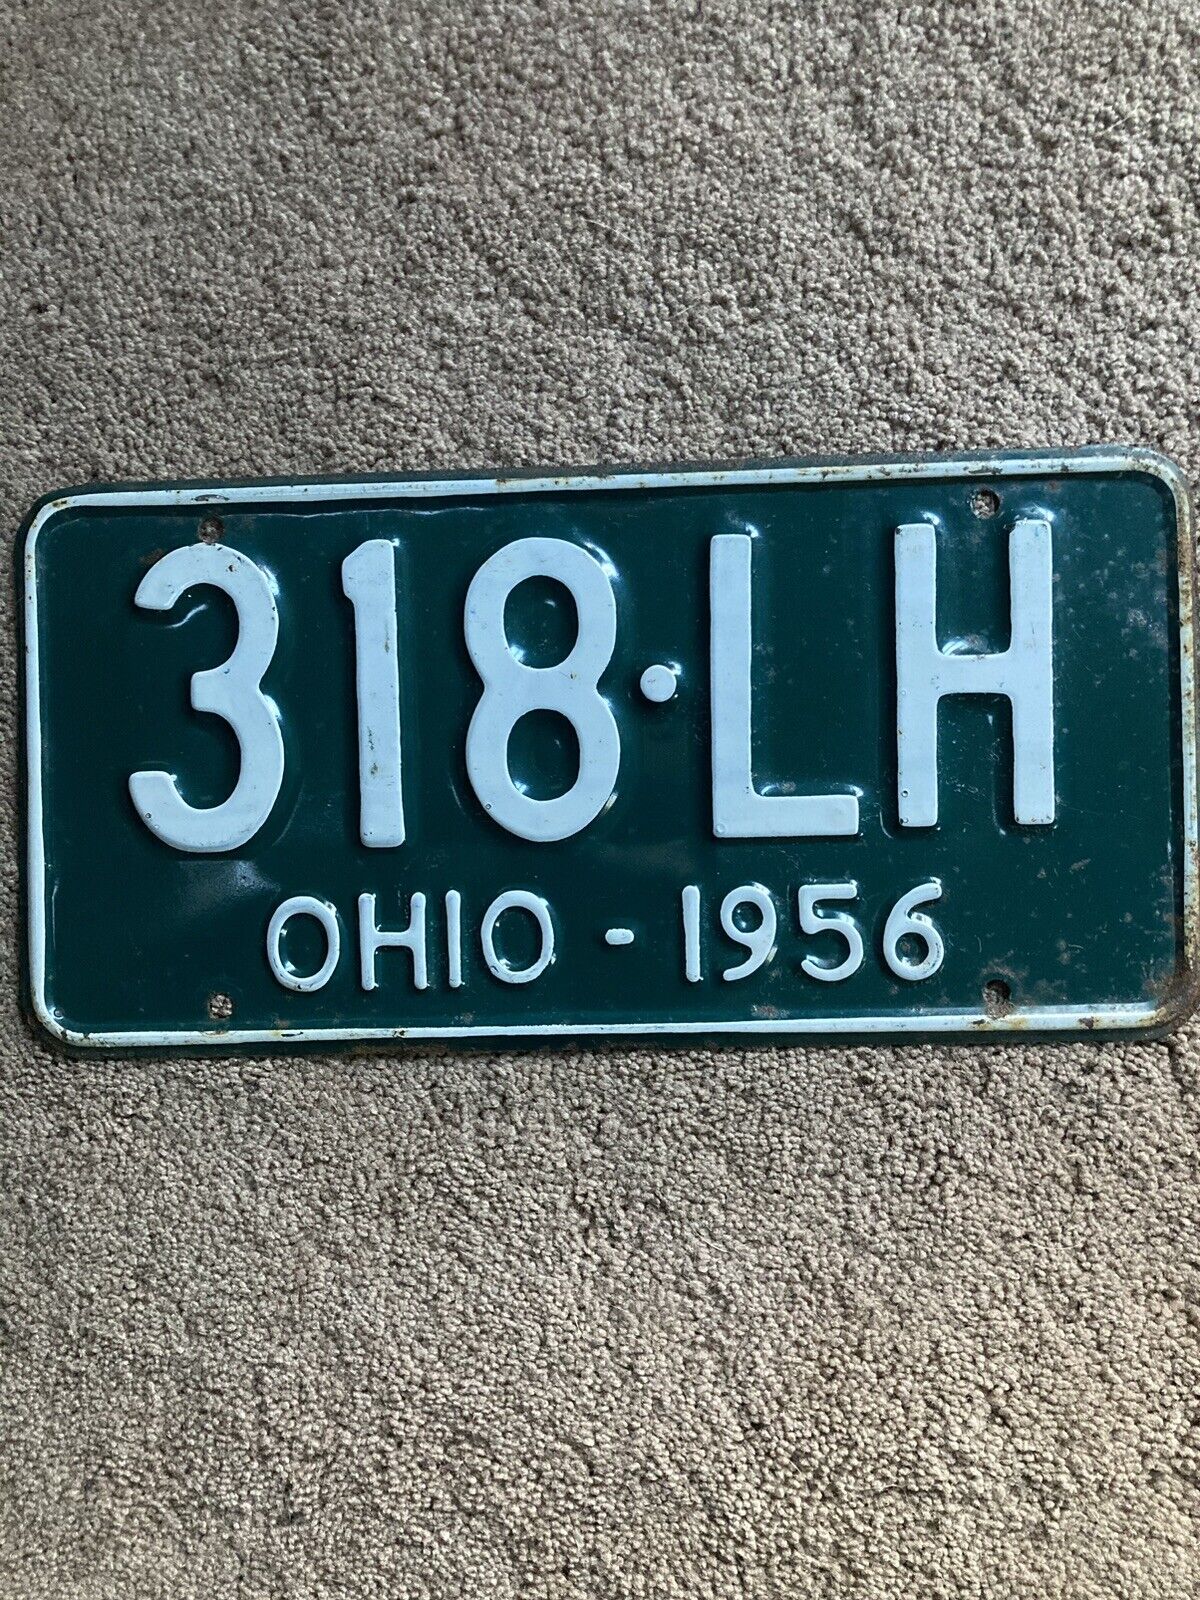 1956 Ohio License Plate -  318 LH - Nice